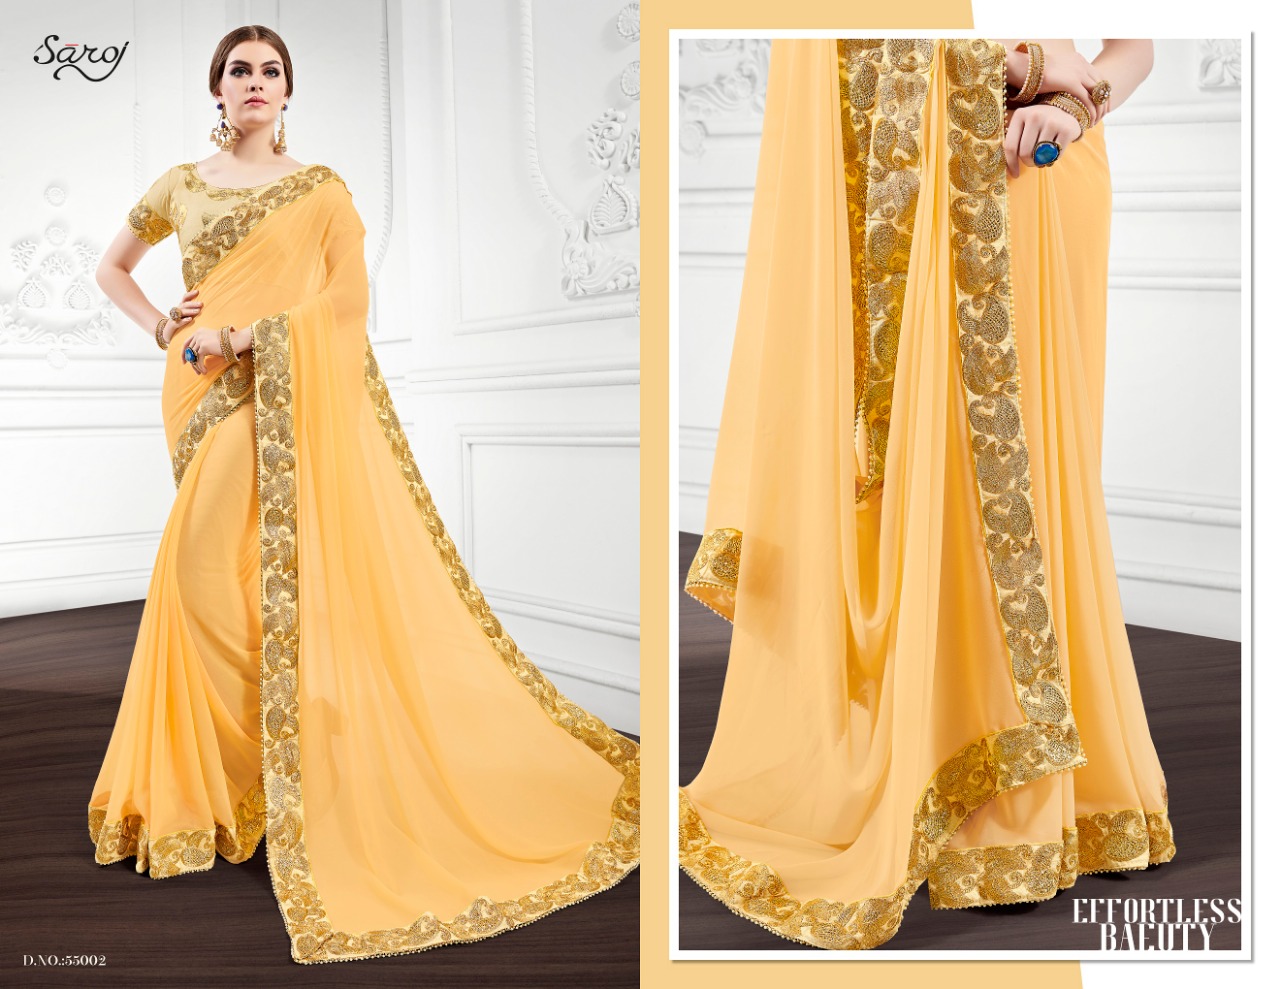 Saroj Saree Indian Fashion 55002